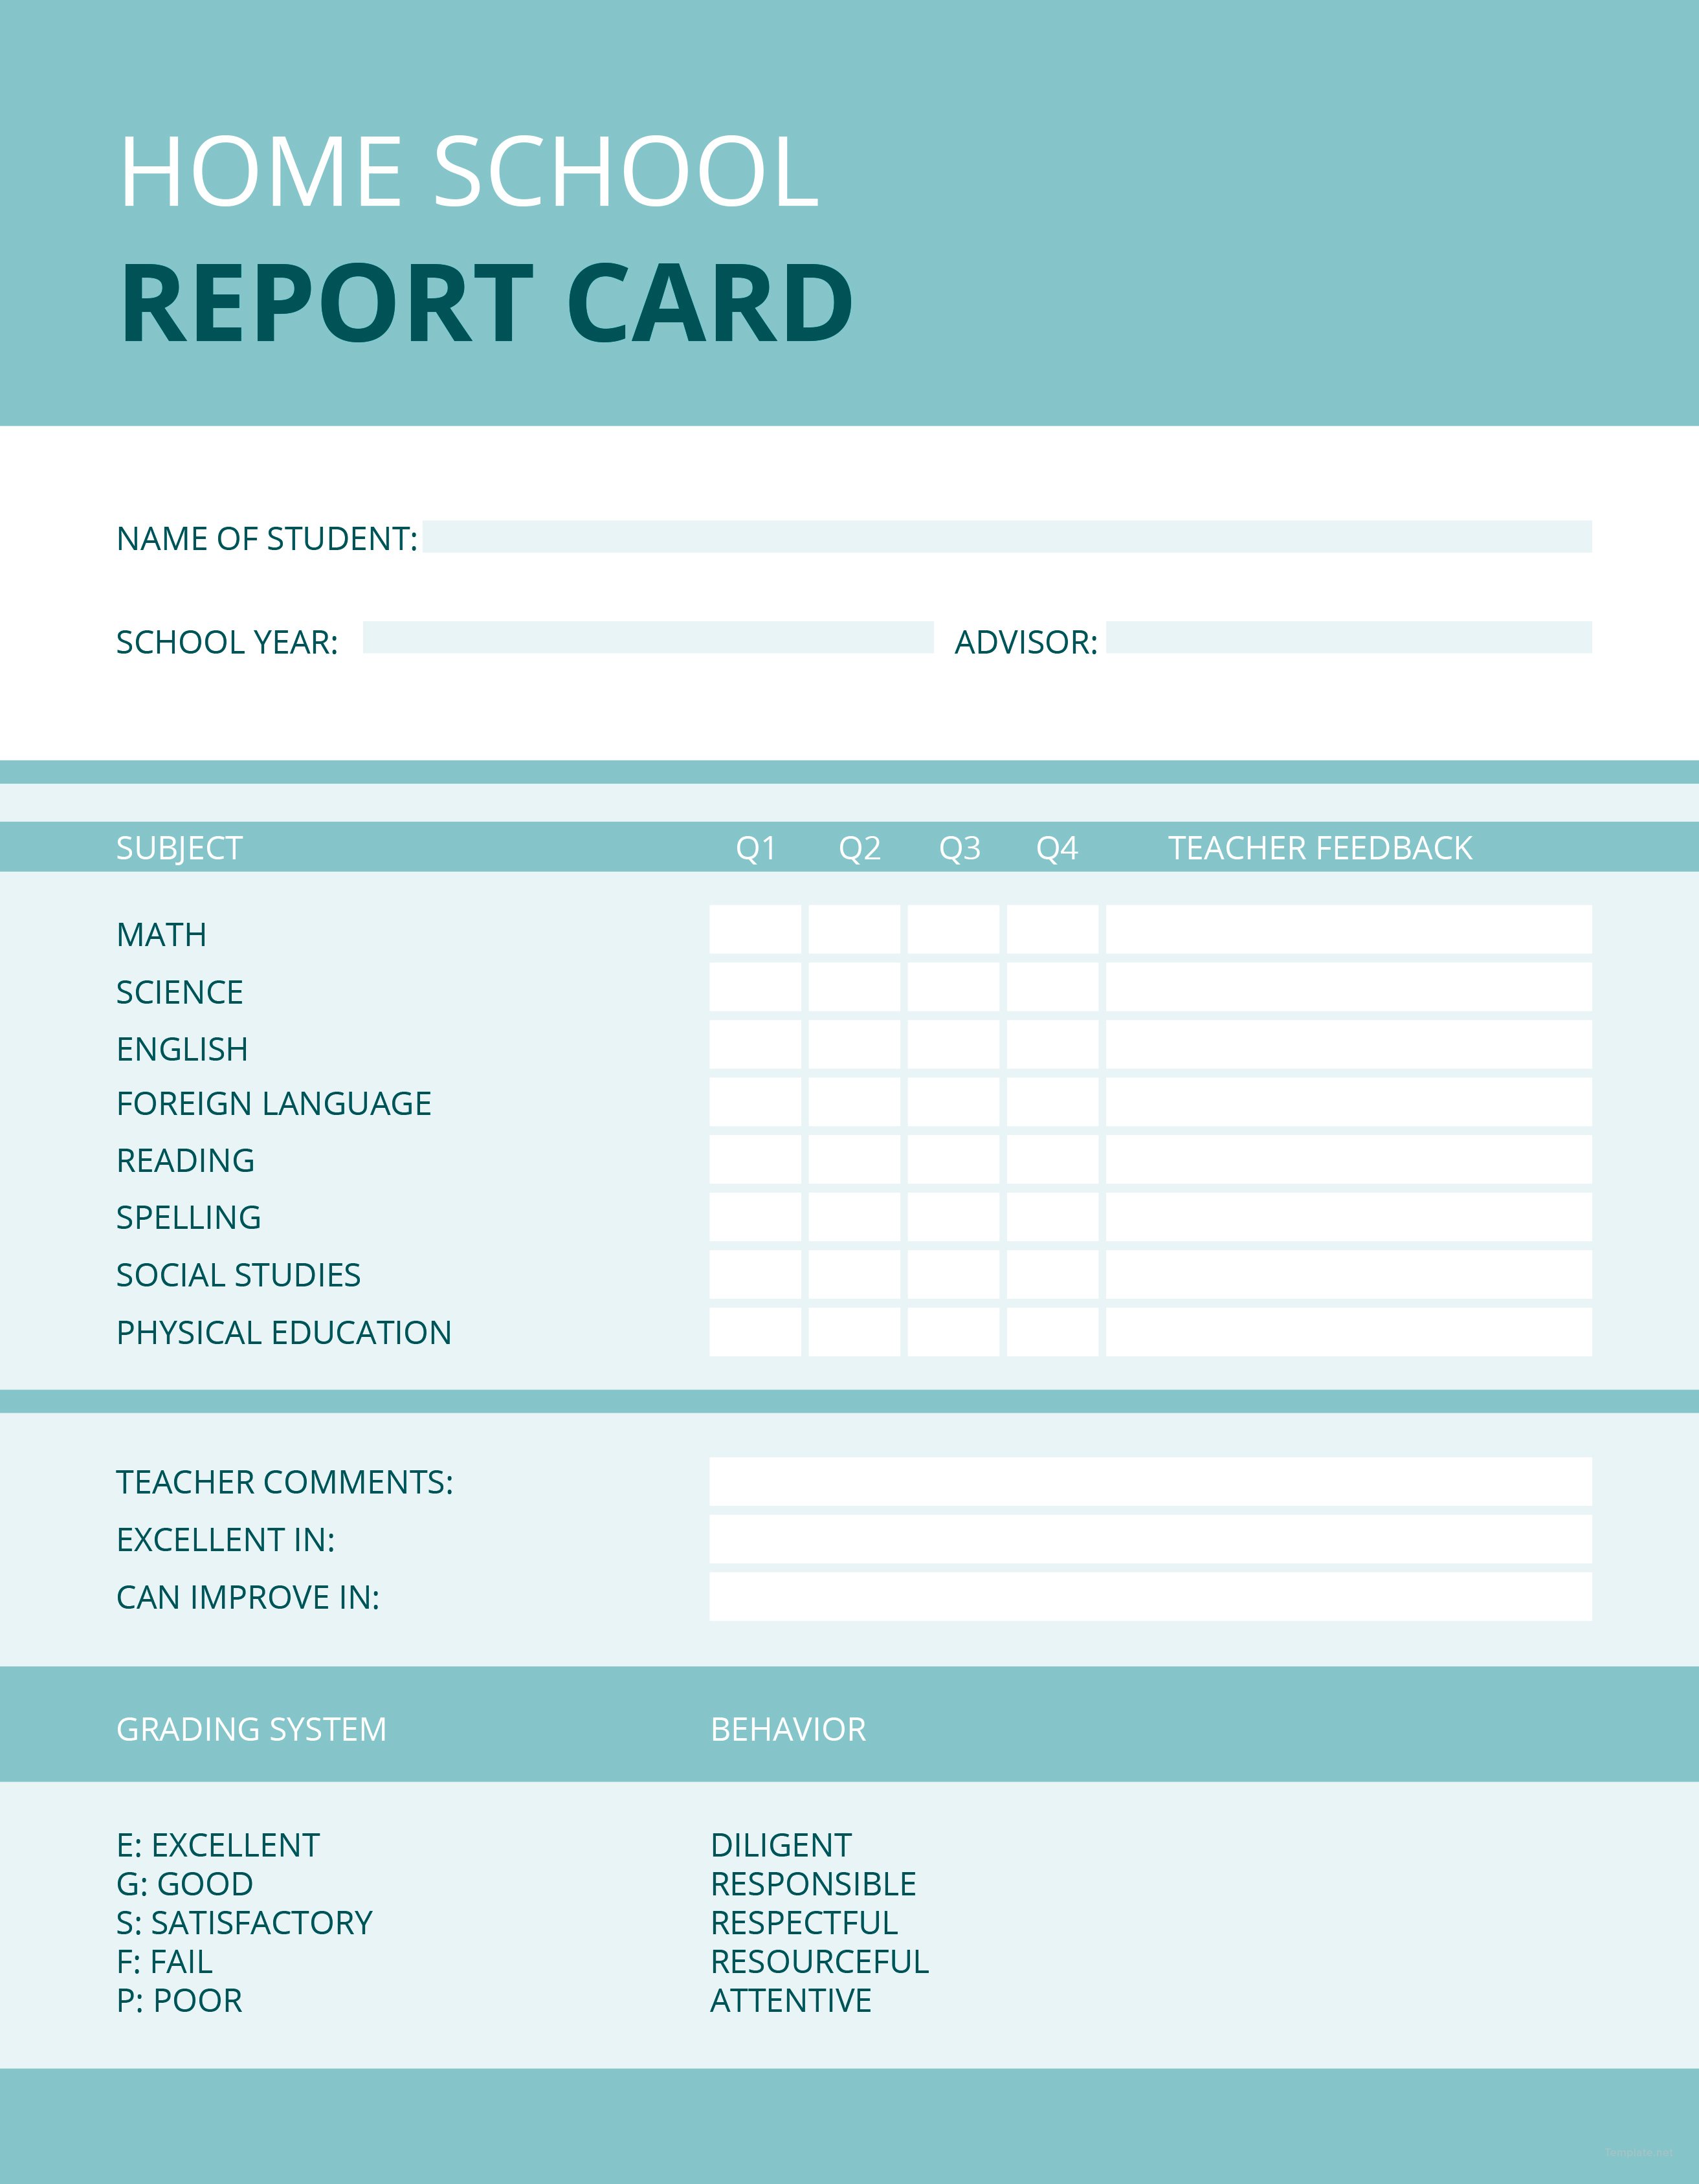 Free Home School Report Card Template in Microsoft Word, Microsoft